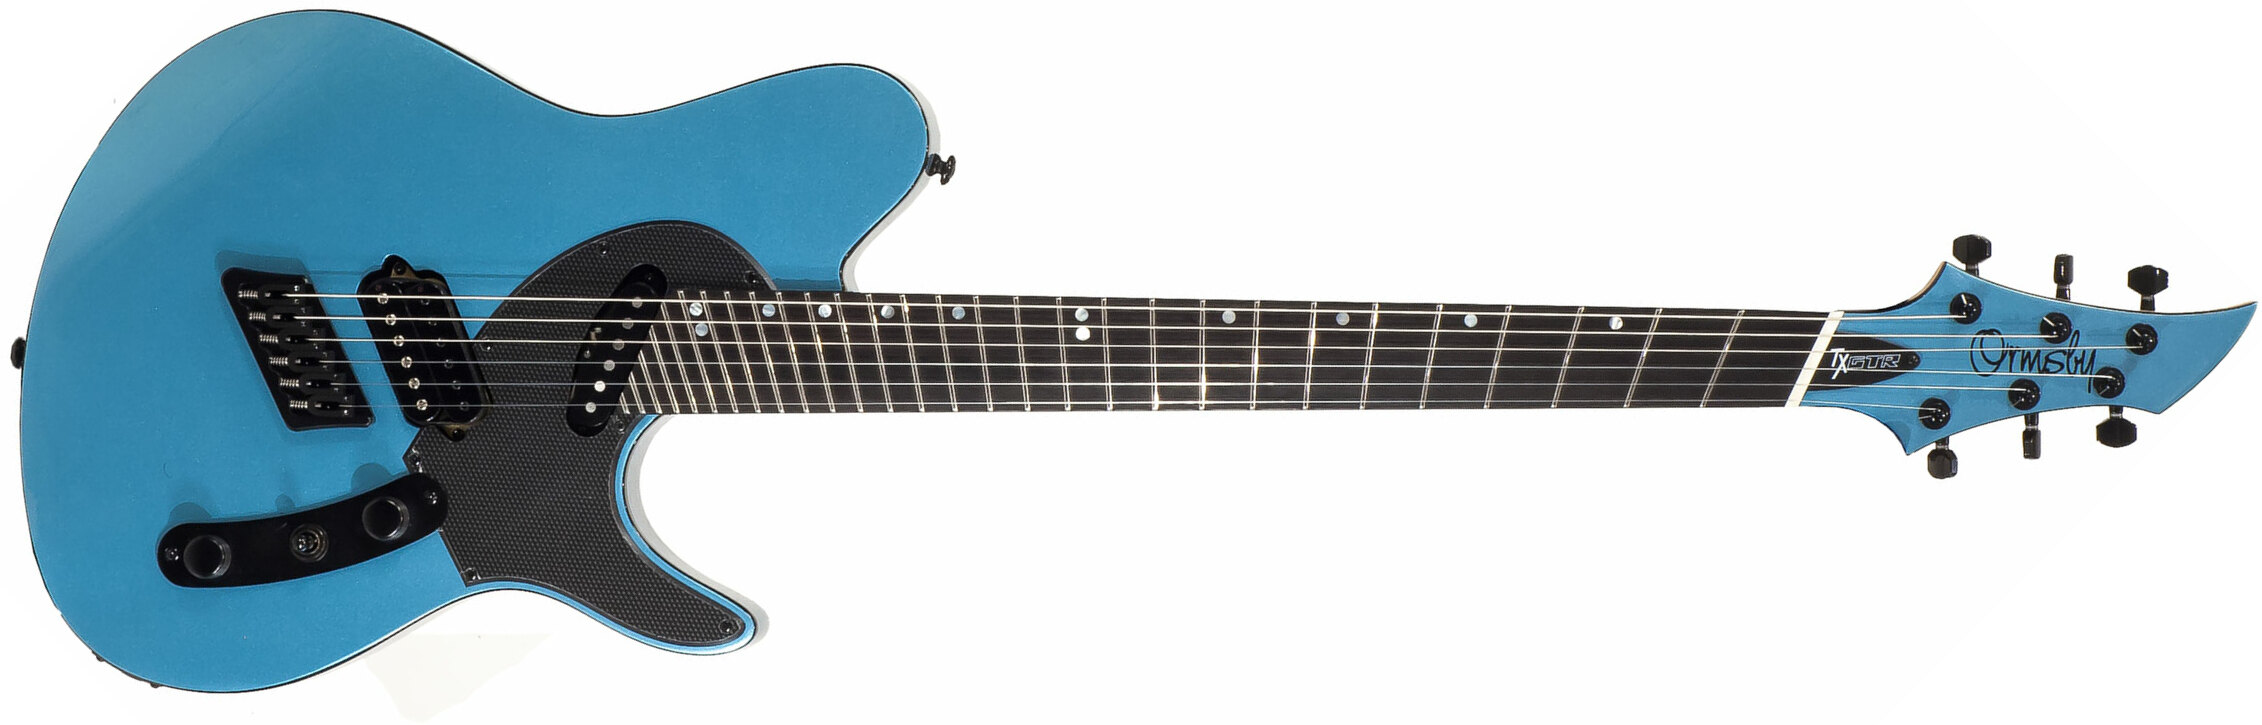 Ormsby Tx Gtr 6 Hs Ht Eb - Azure Blue - Multi-scale gitaar - Main picture